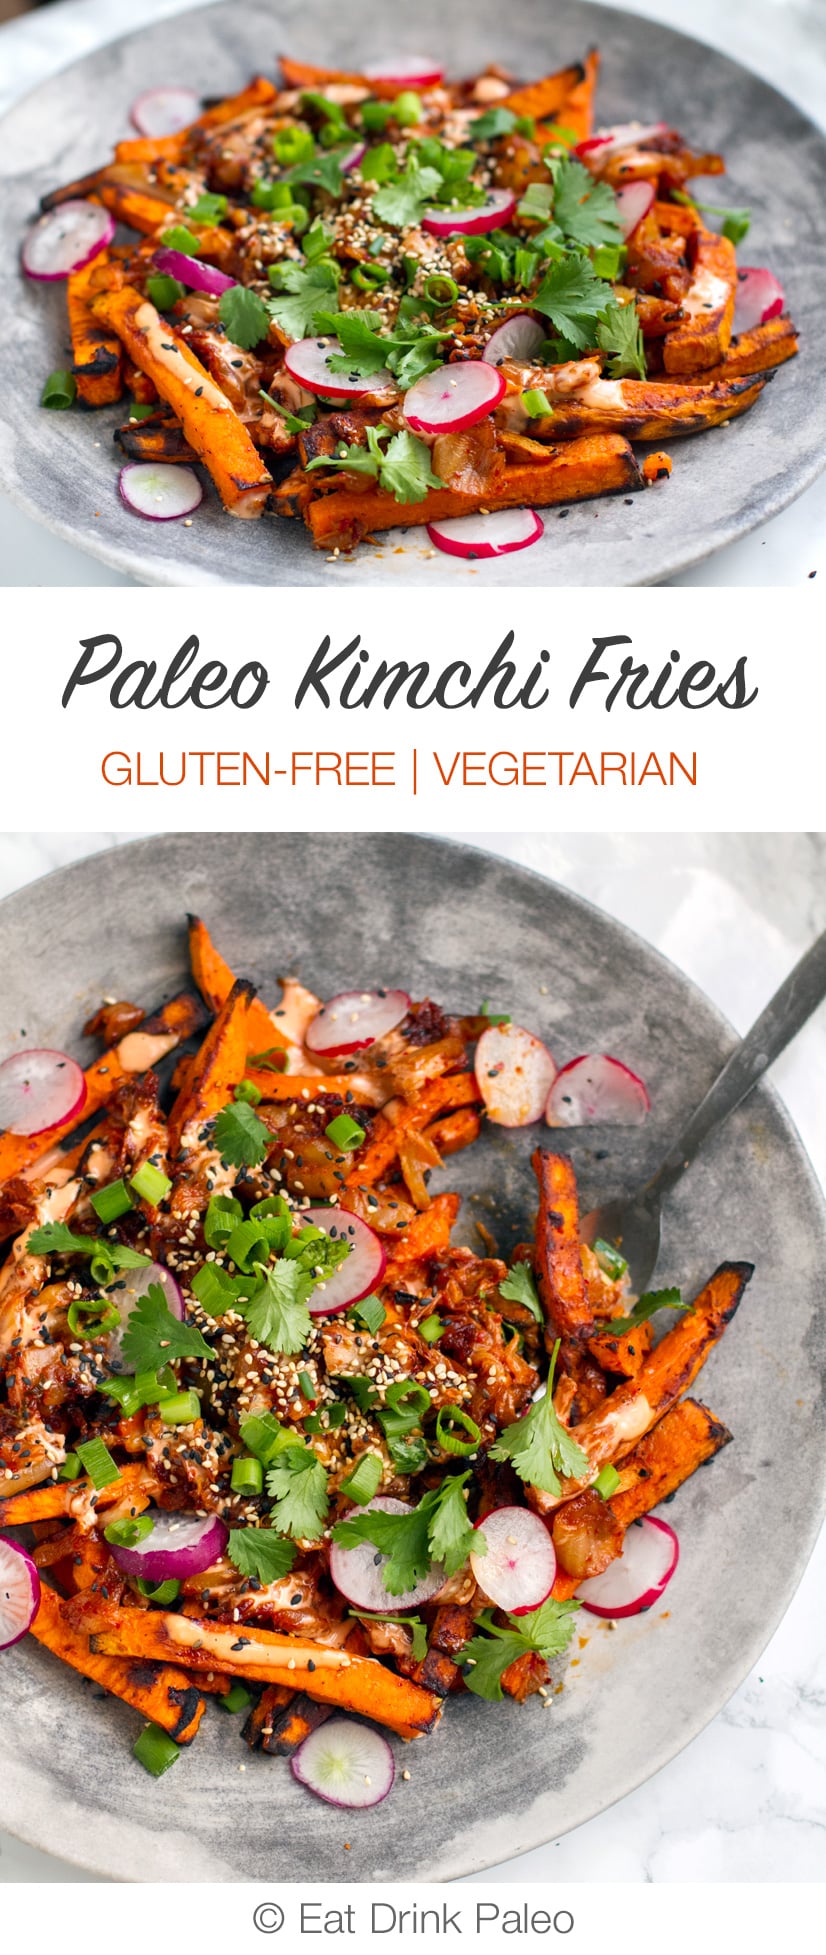 Paleo Kimchi Fries (Gluten-Free, Dairy-free, Vegetarian)